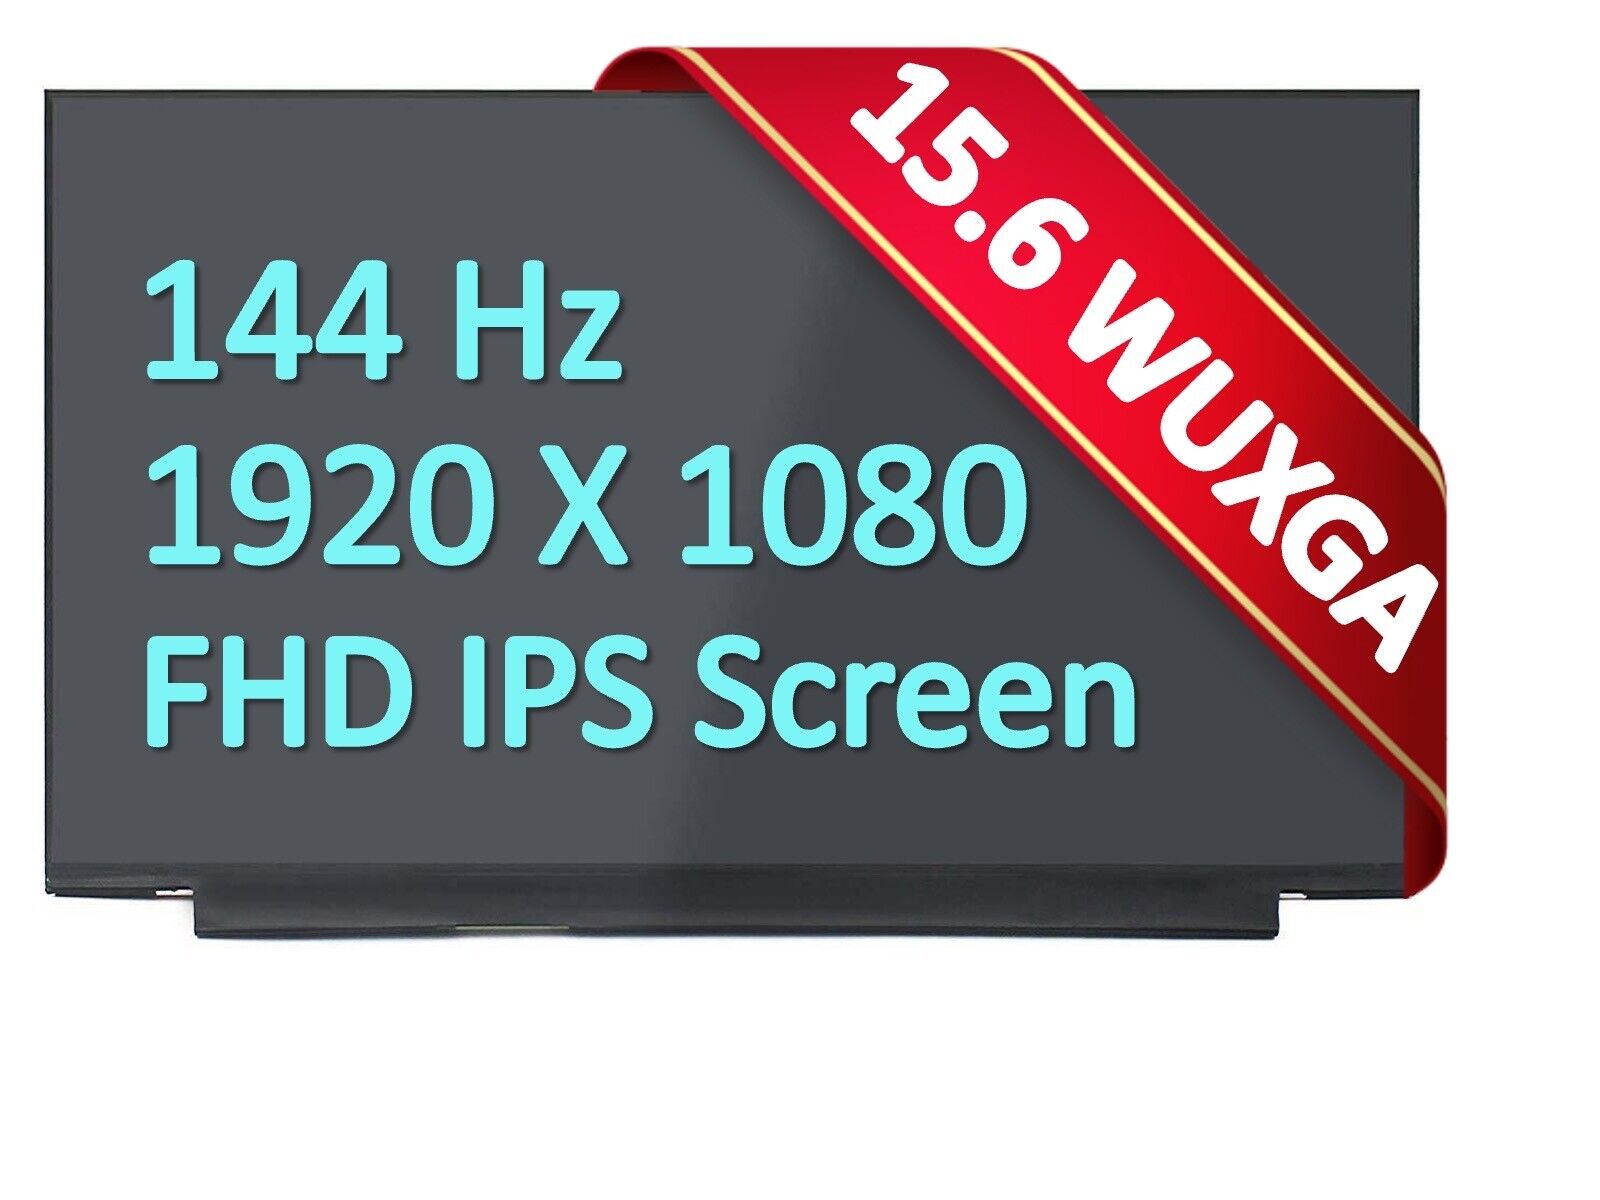 New laptop LED LCD Screen for B156HAN15.1 B156HAN15.0 144Hz IPS FHD 1920x1080